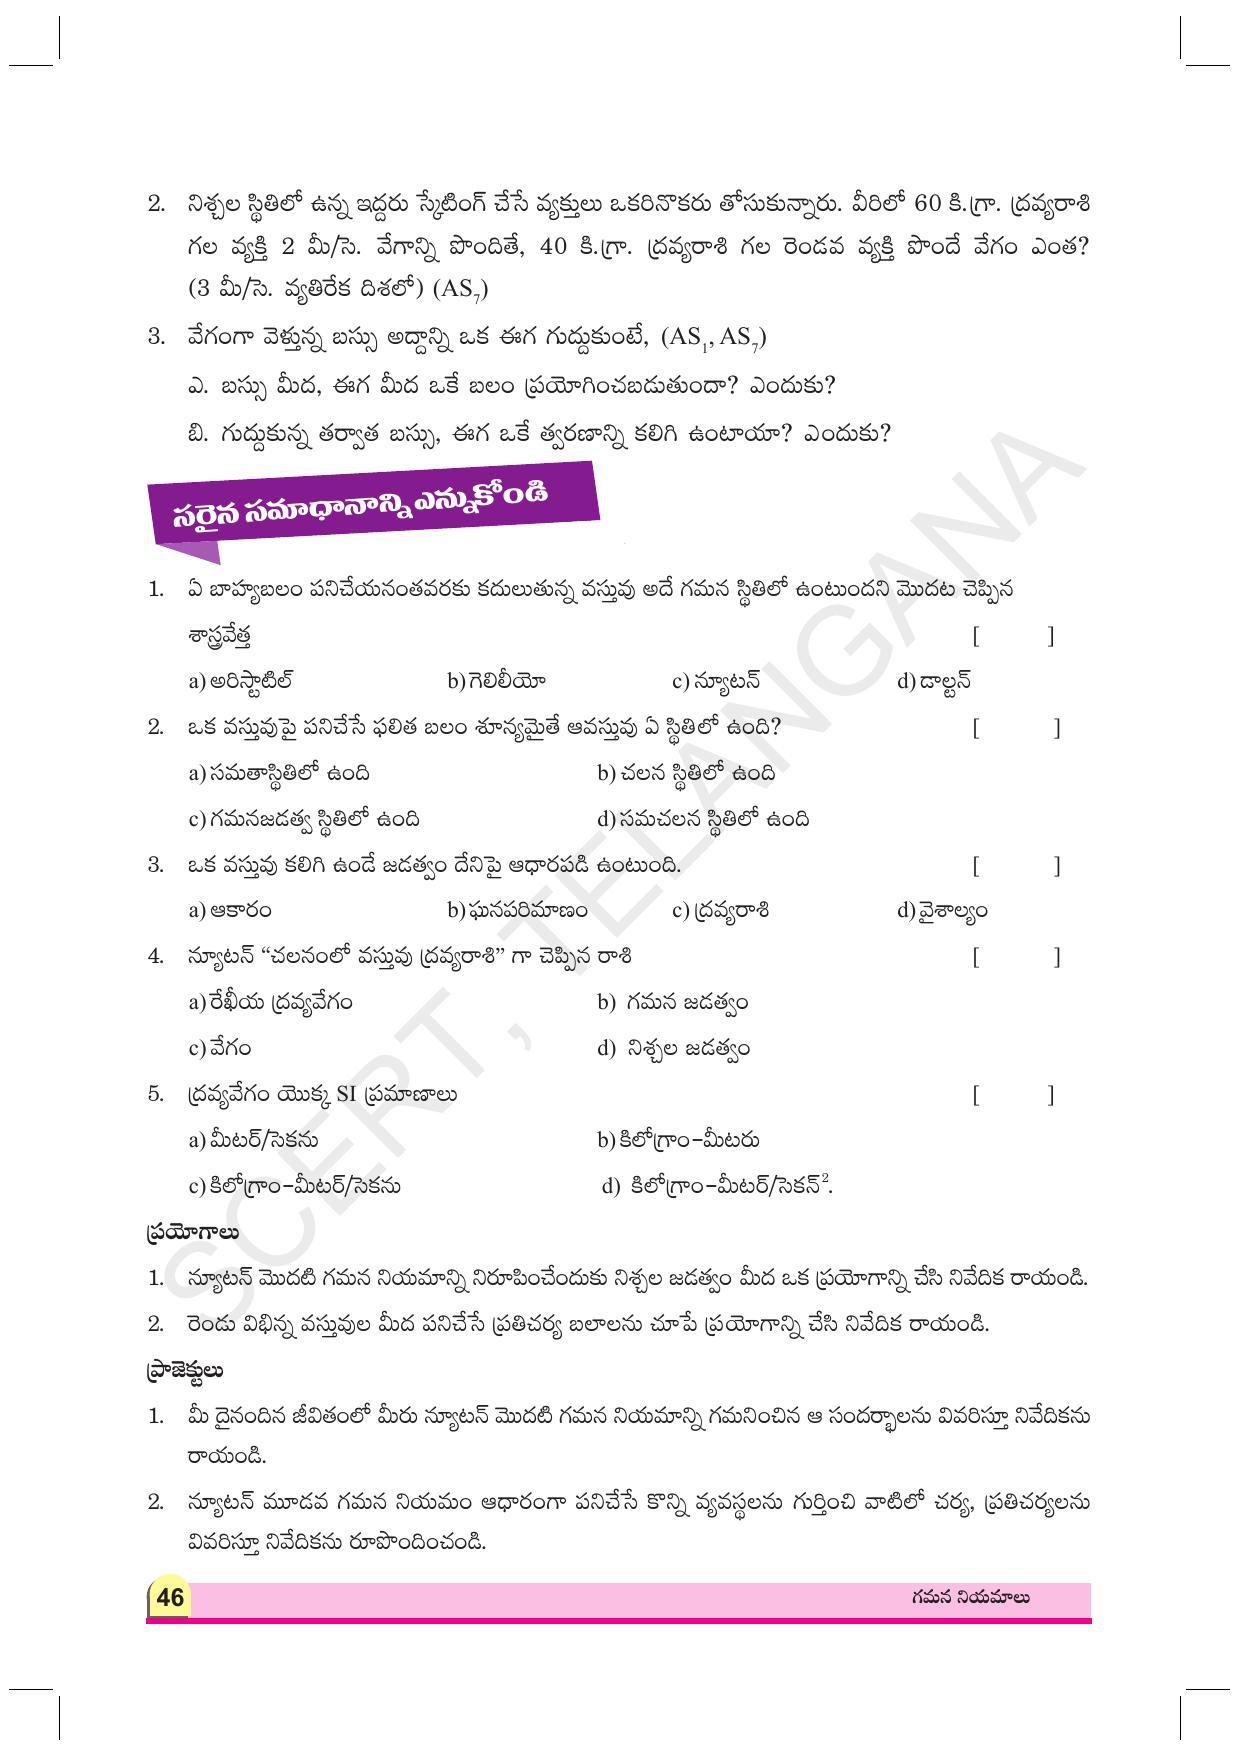 TS SCERT Class 9 Second Language (Telugu Medium) Text Book - IndCareer Docs